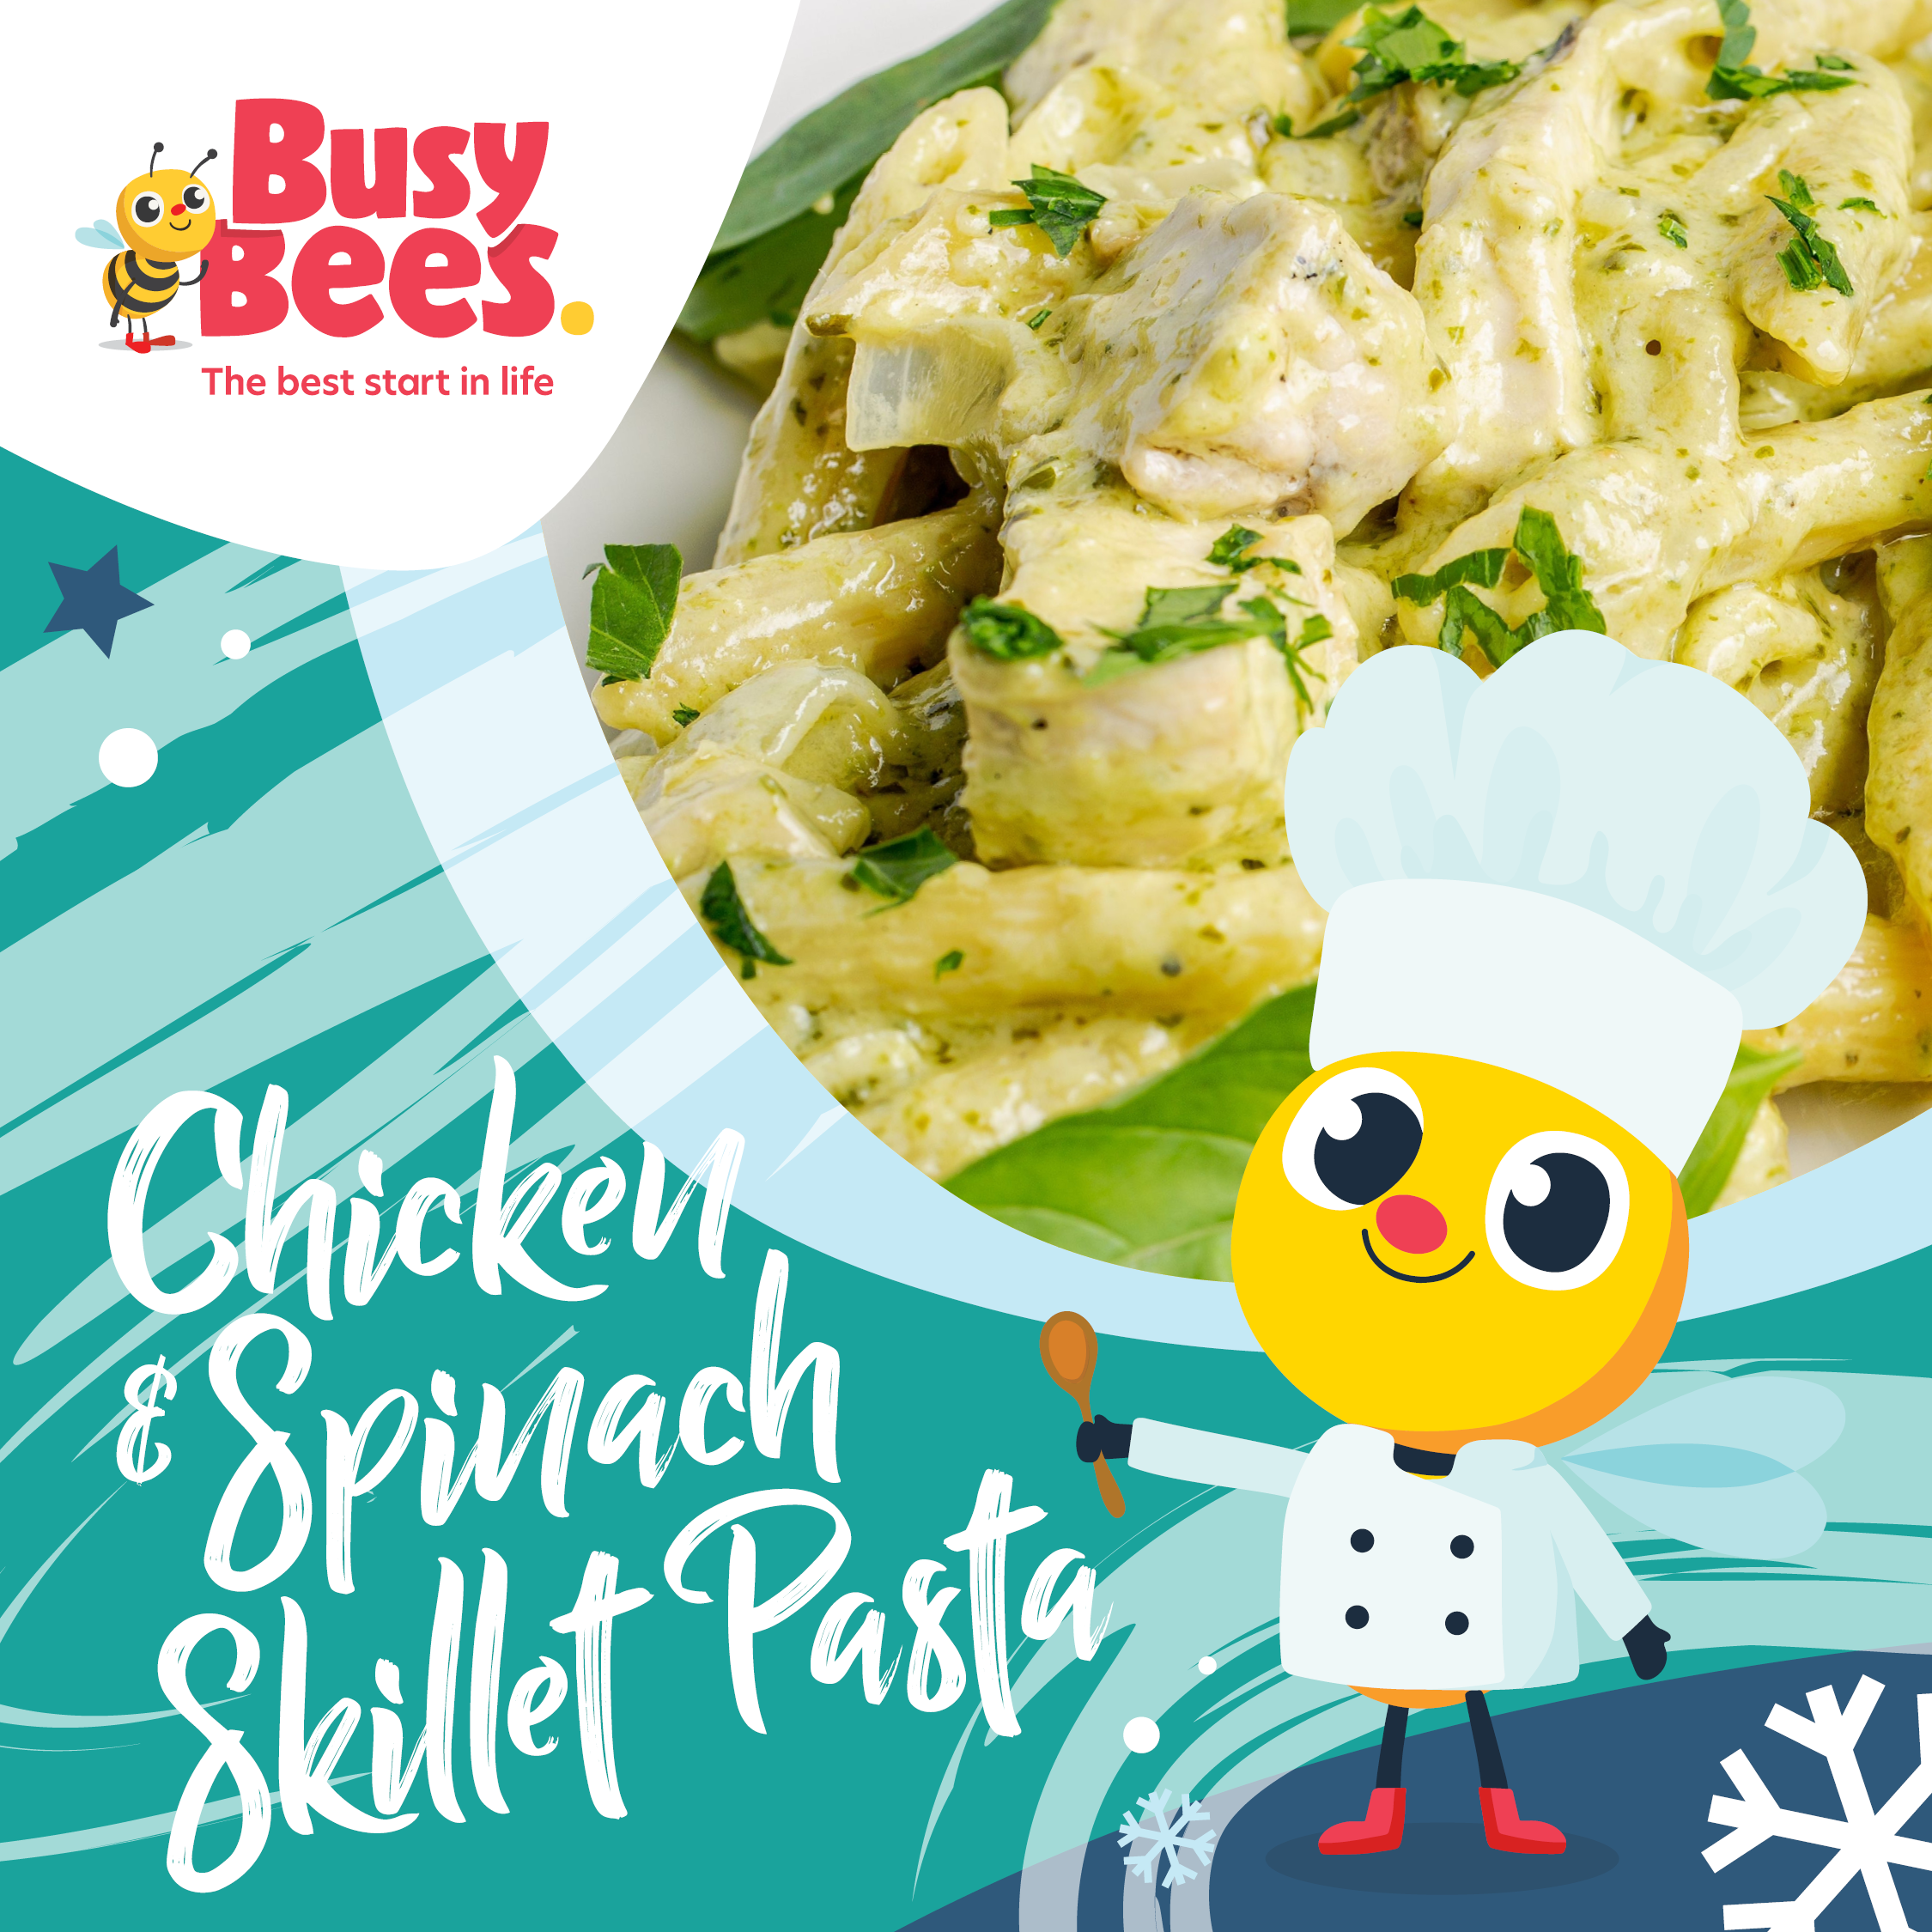 Chicken and spinach skillet pasta